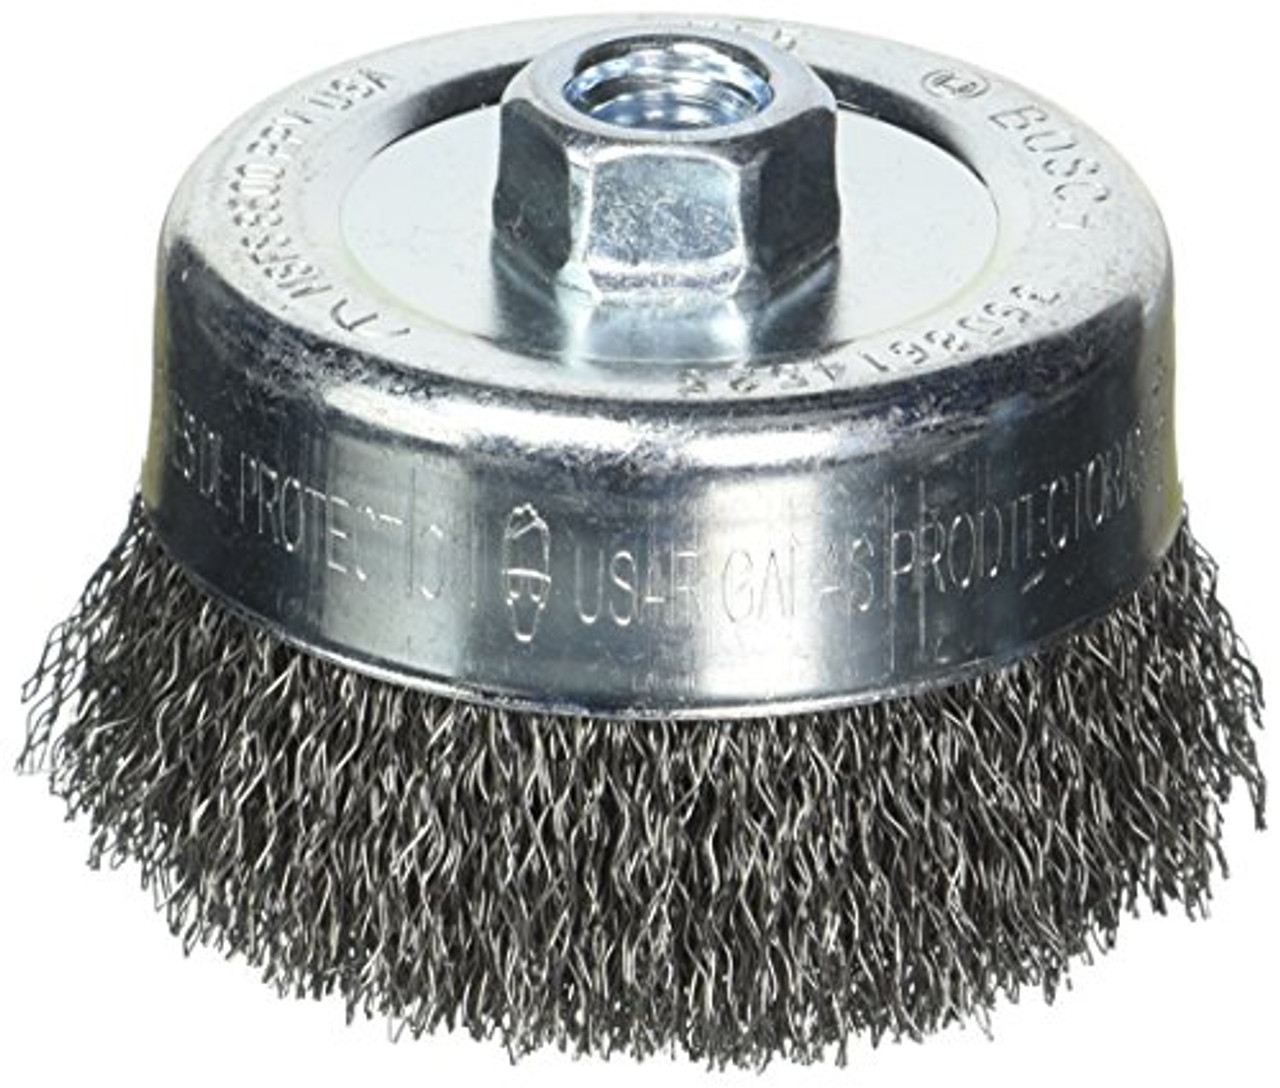 Bosch WB525 4-Inch Crimped Carbon Steel Cup Brush, 5/8-Inch x 11 Thread Arbor